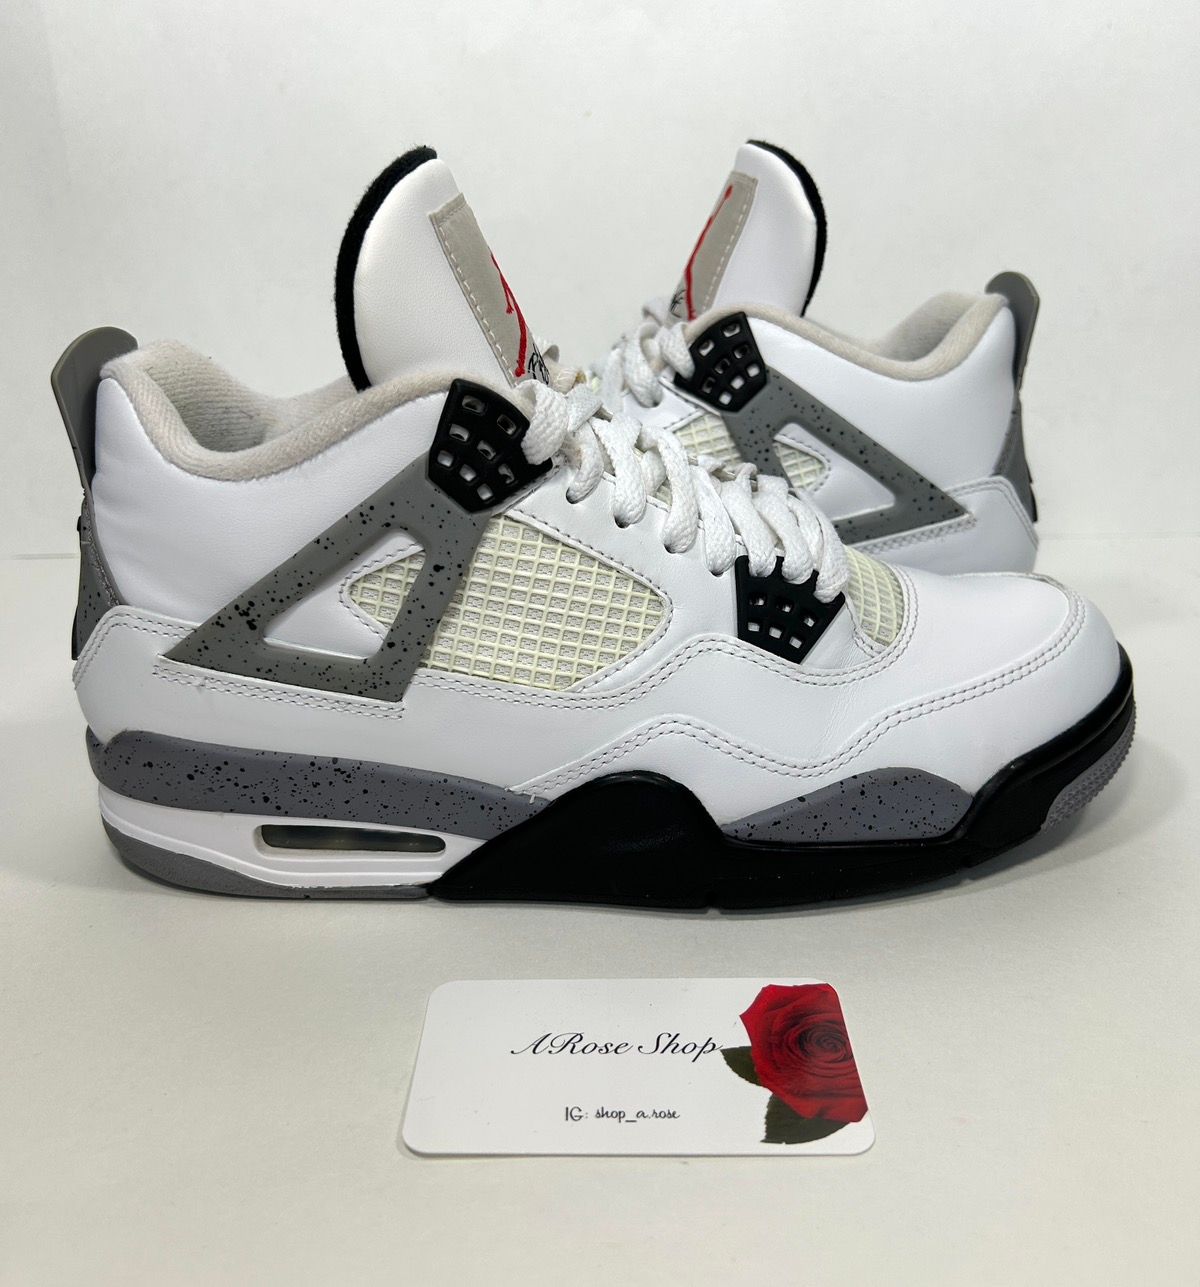 Pre-owned Jordan Nike Air Jordan 4 Retro ‘white Cement' Shoes Size: 8 M